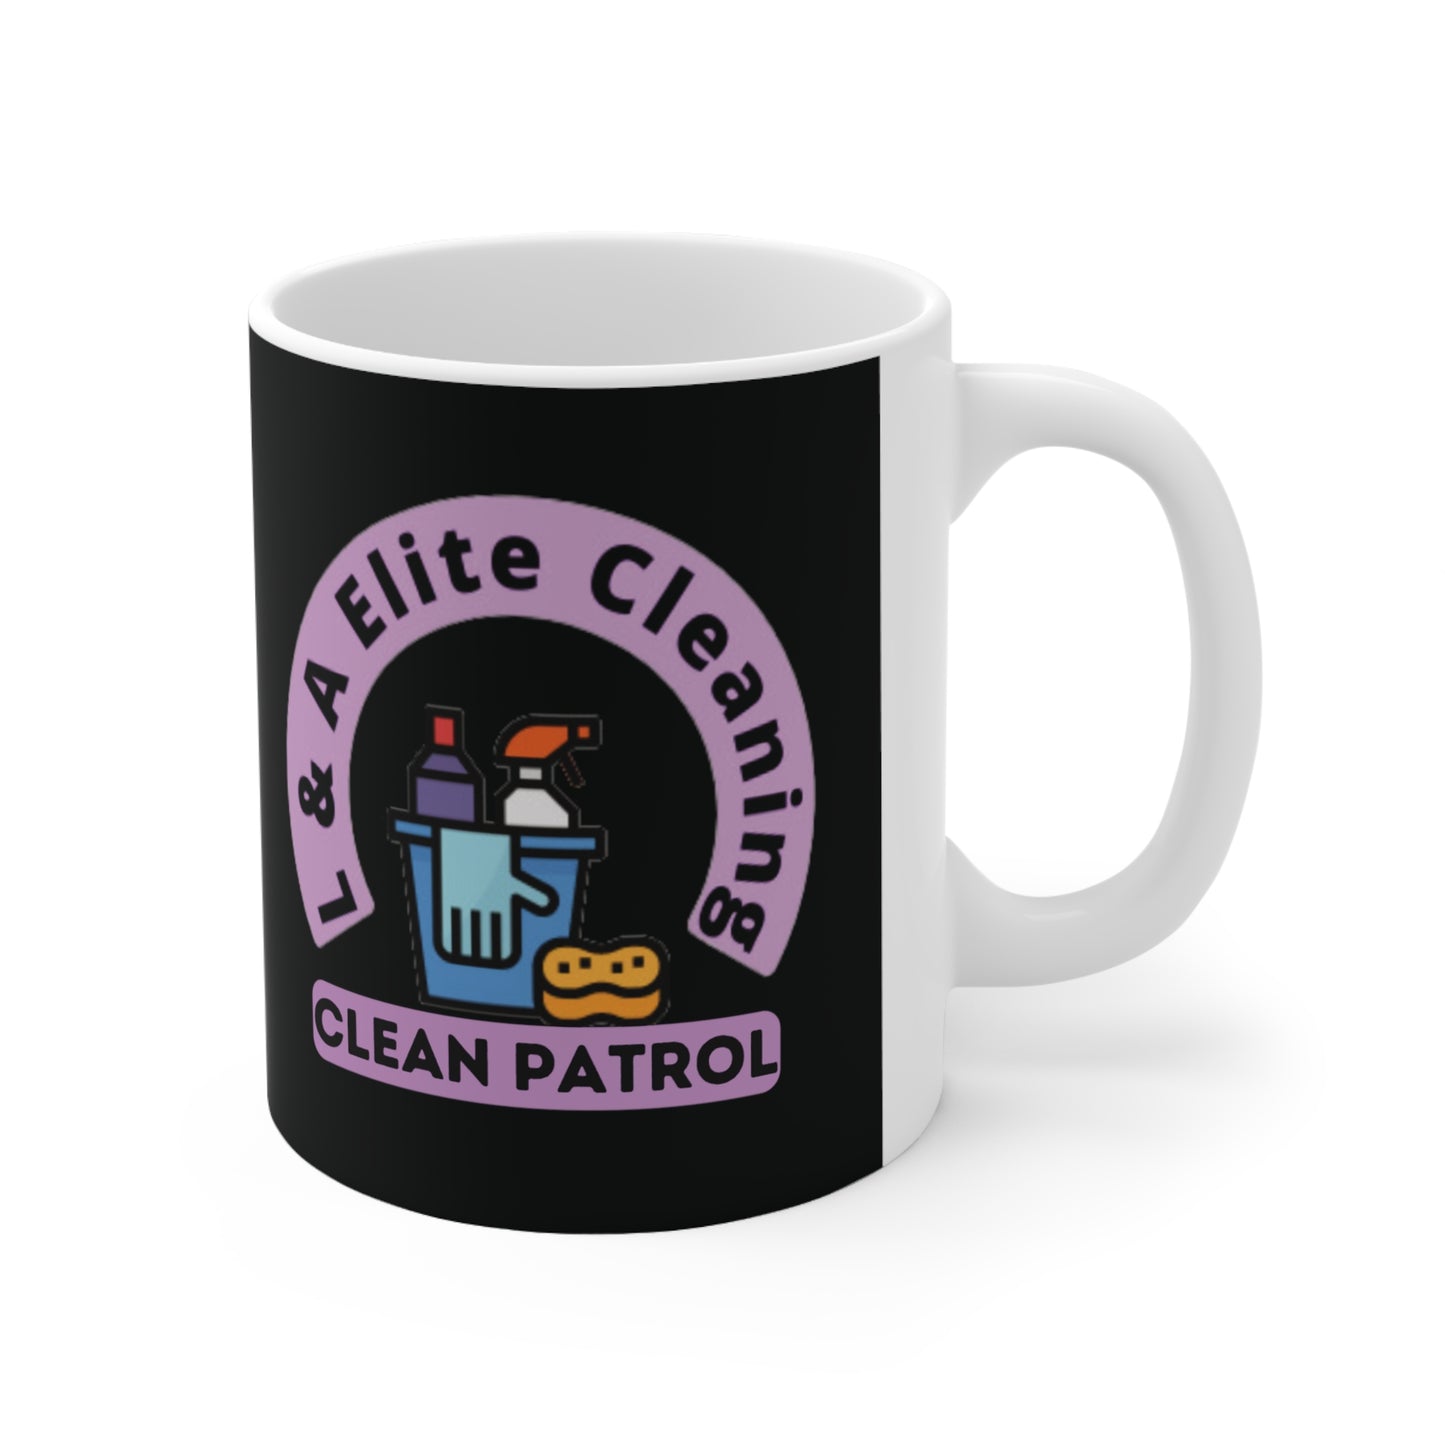 Clean Patrol Cups